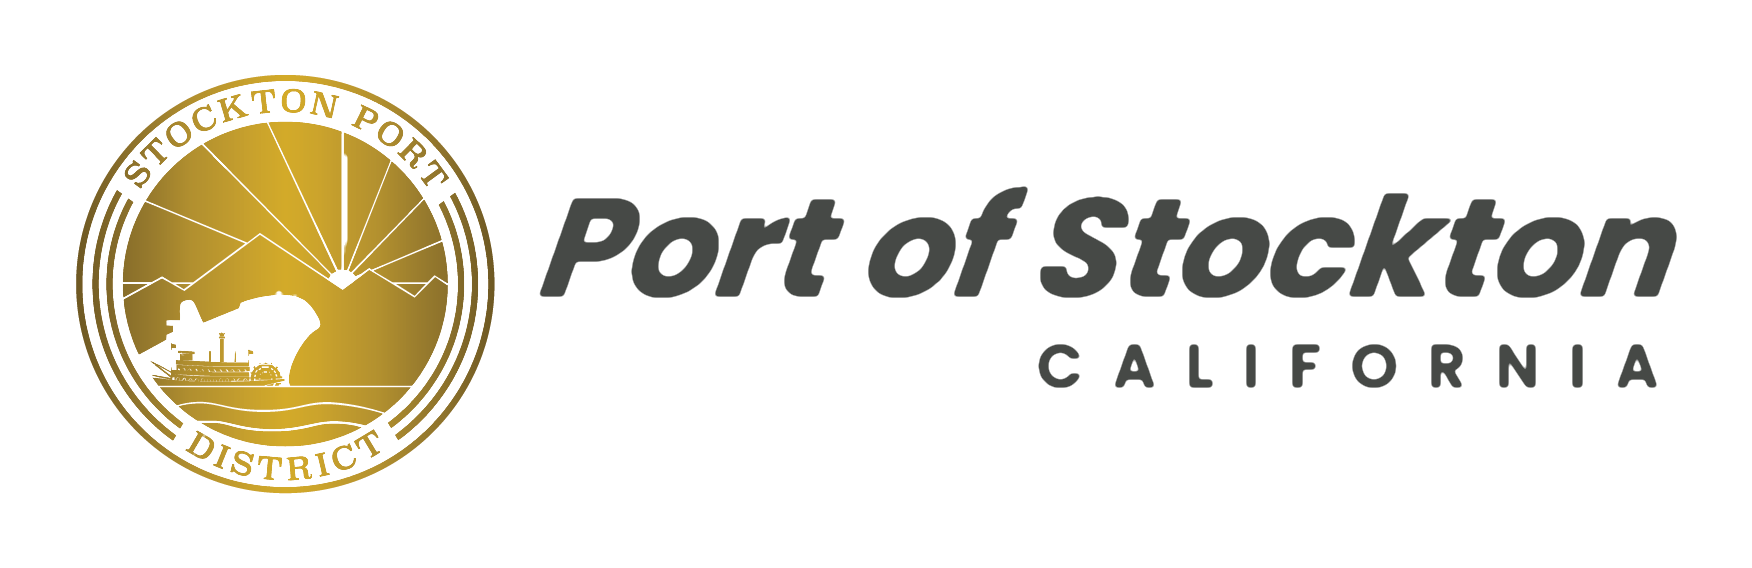 port of stockton logo